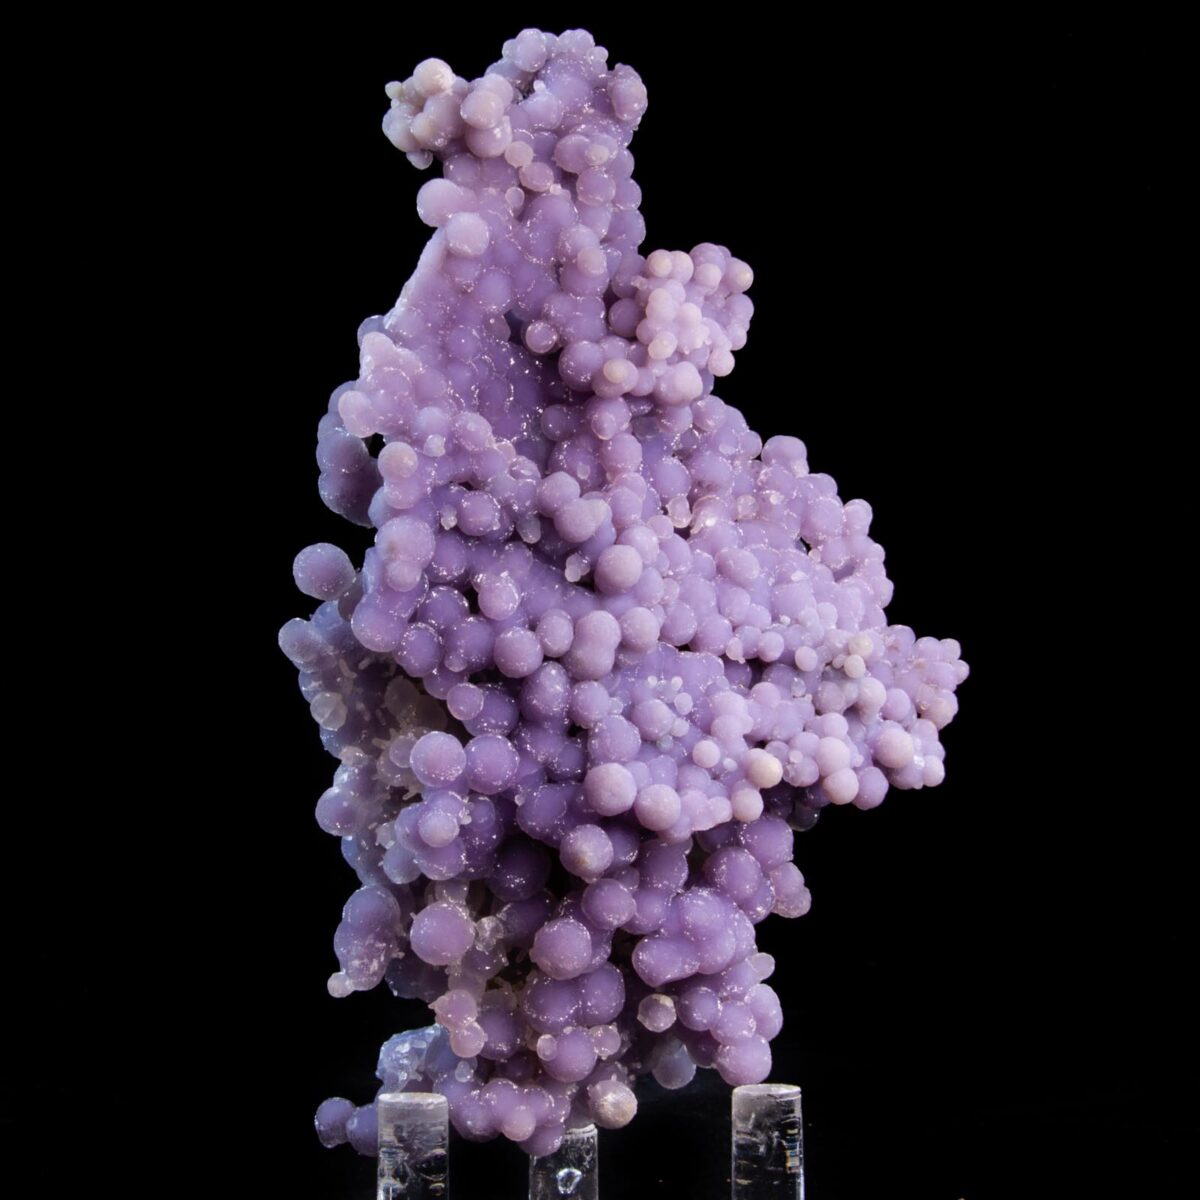 Amethyst (Grape Agate)